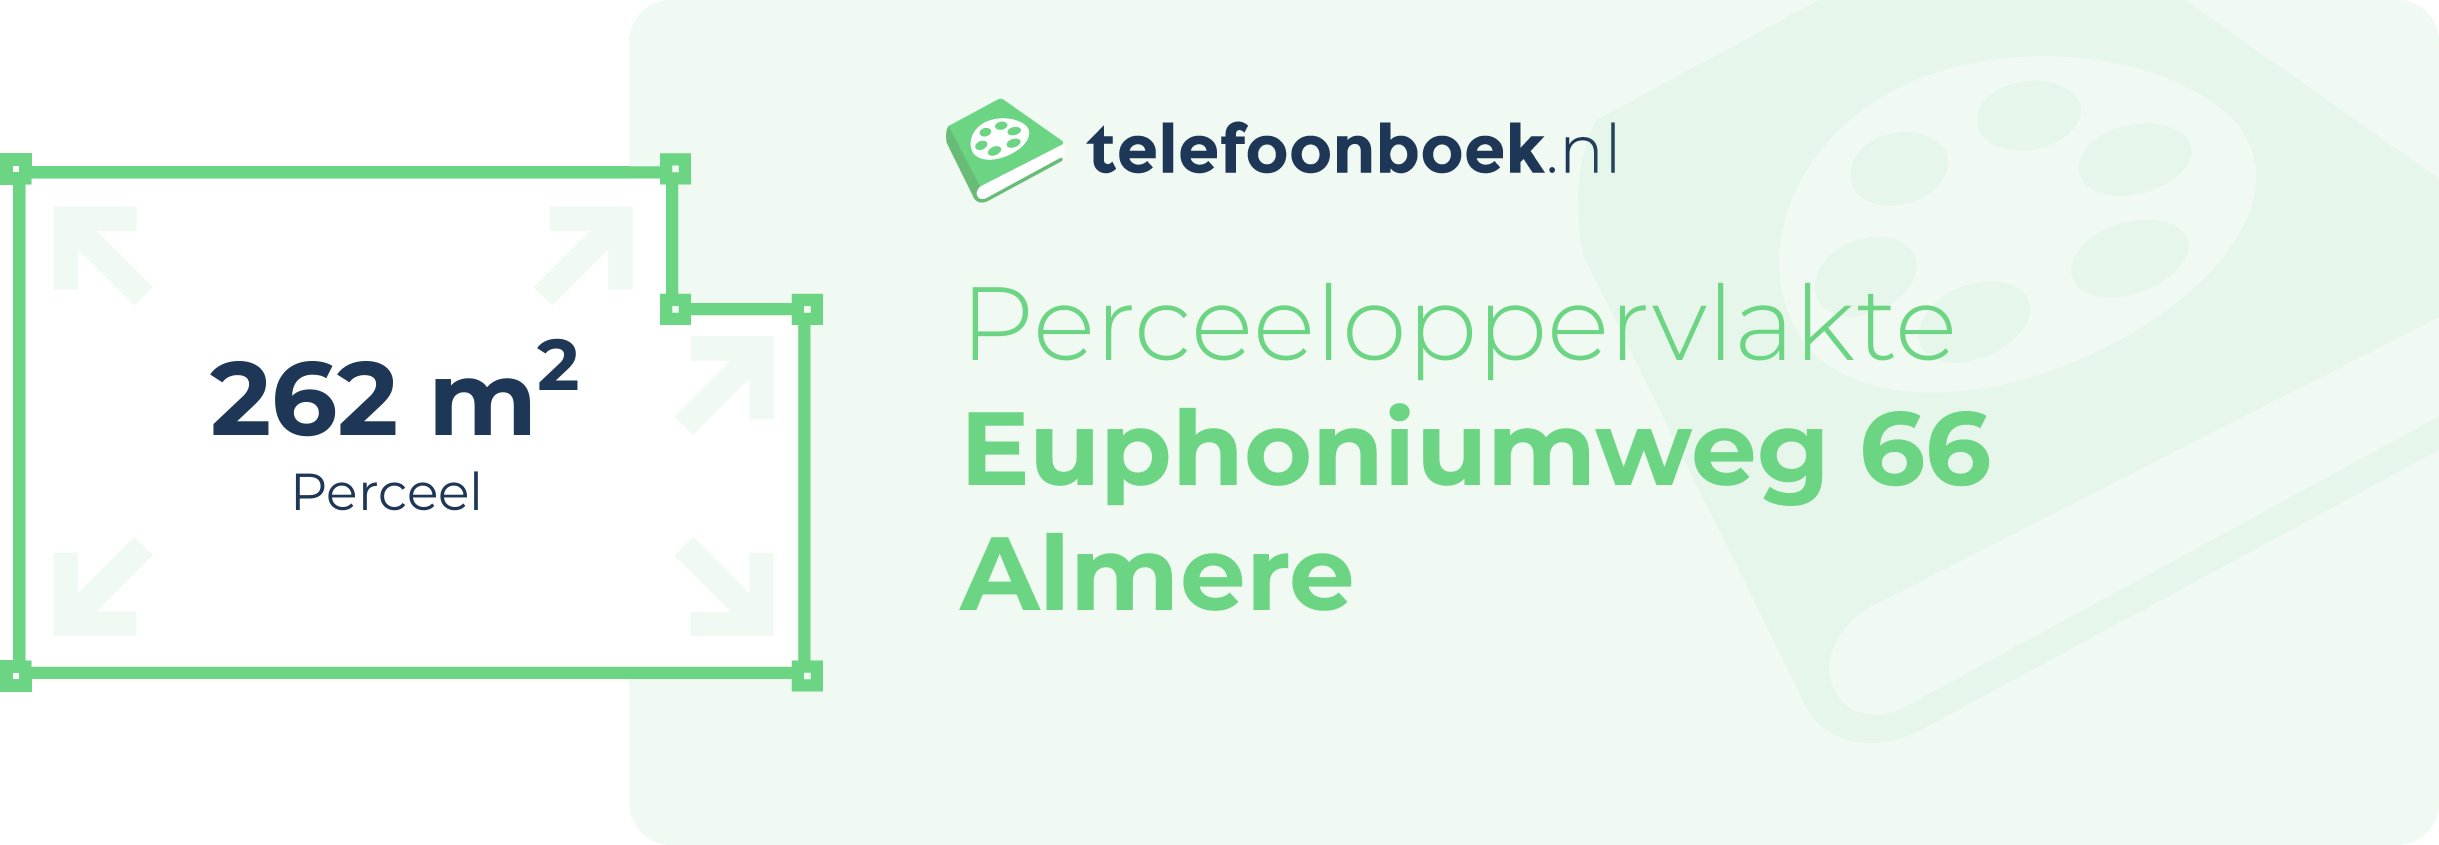 Perceeloppervlakte Euphoniumweg 66 Almere